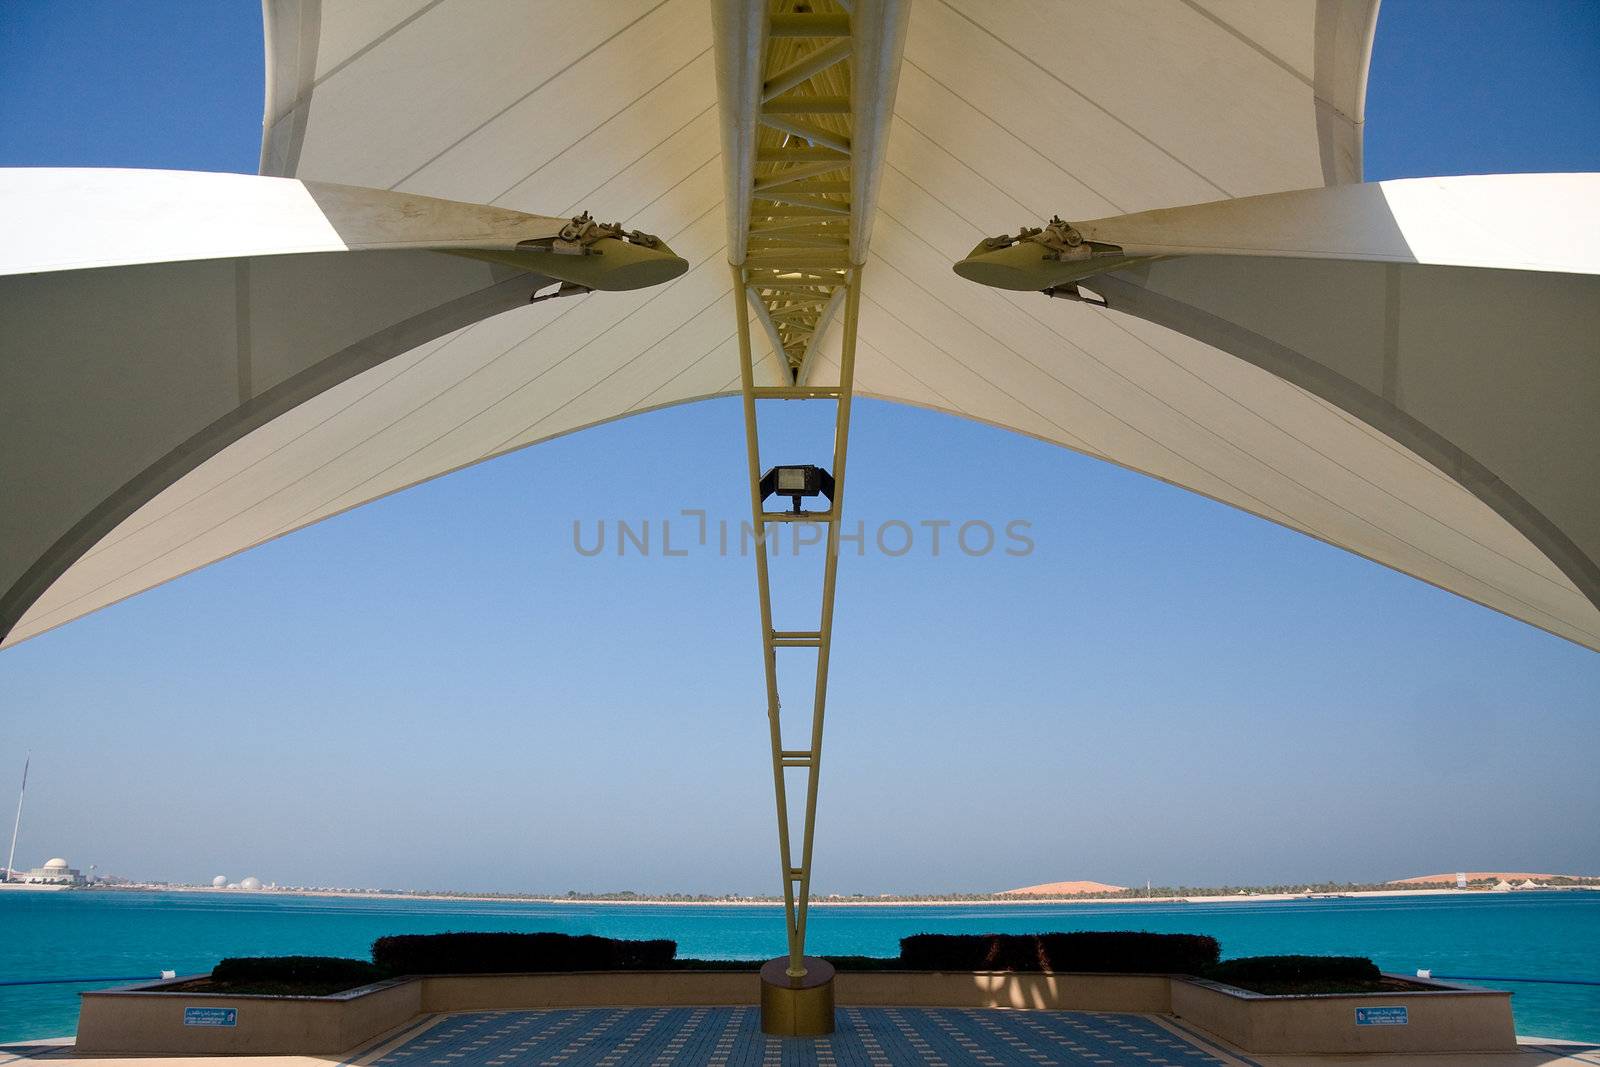 Modern Abu Dhabi structure framing sea and island by steheap